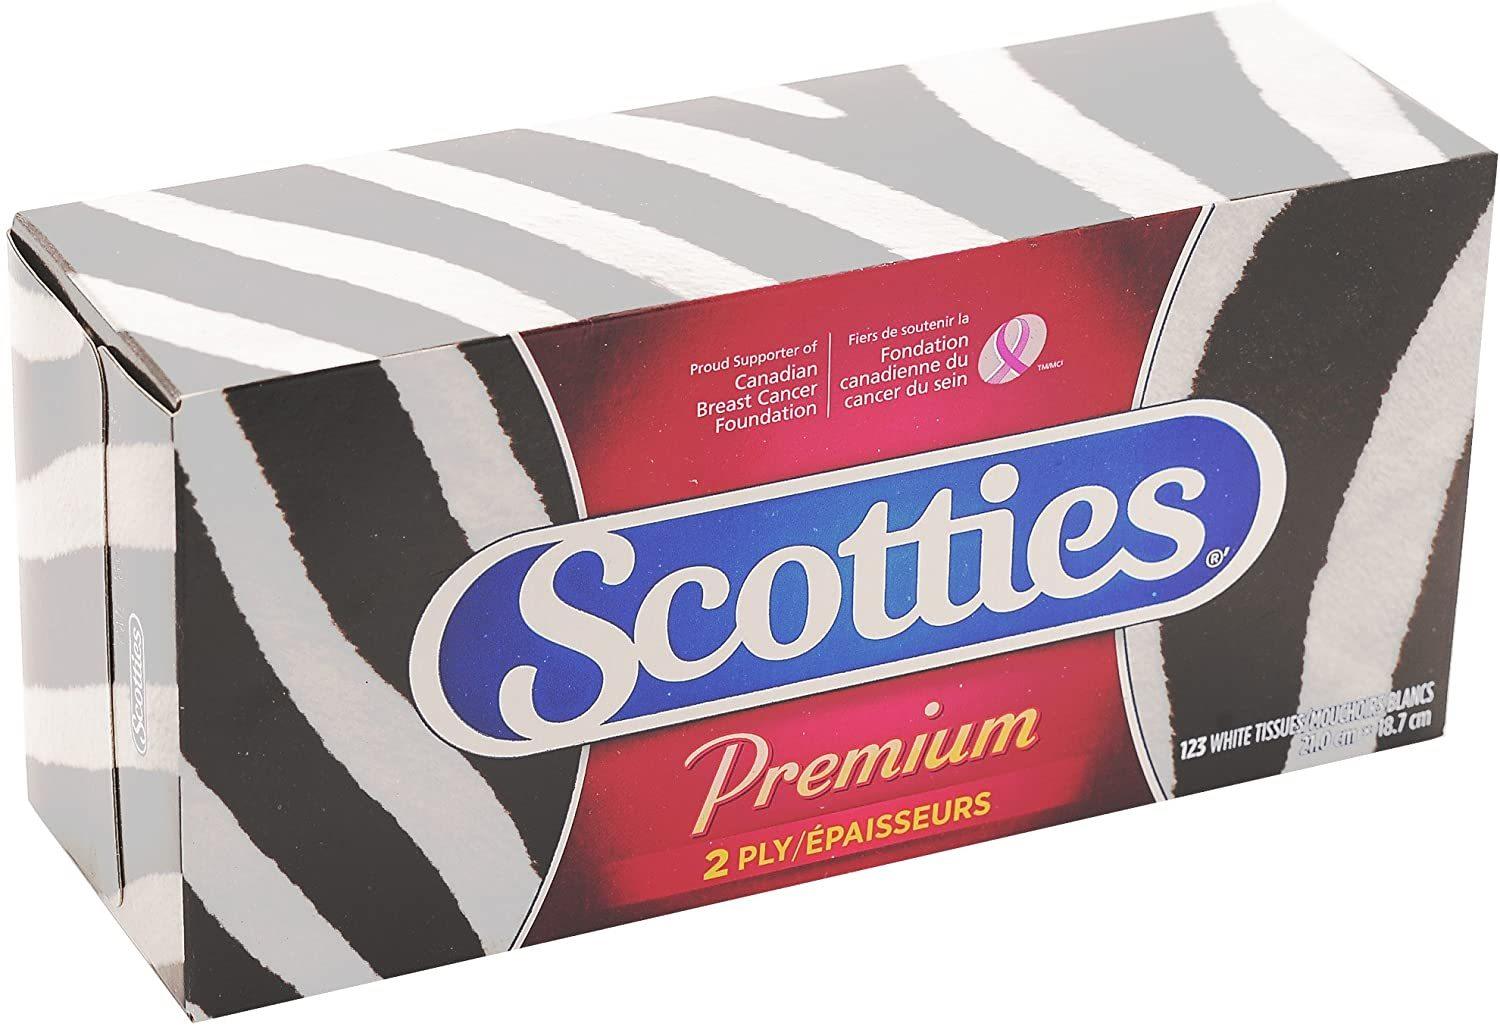 Scotties Premium Tissues,2ply, 1 box - Deliver-Grocery Online (DG),  9354-2793 Québec Inc.